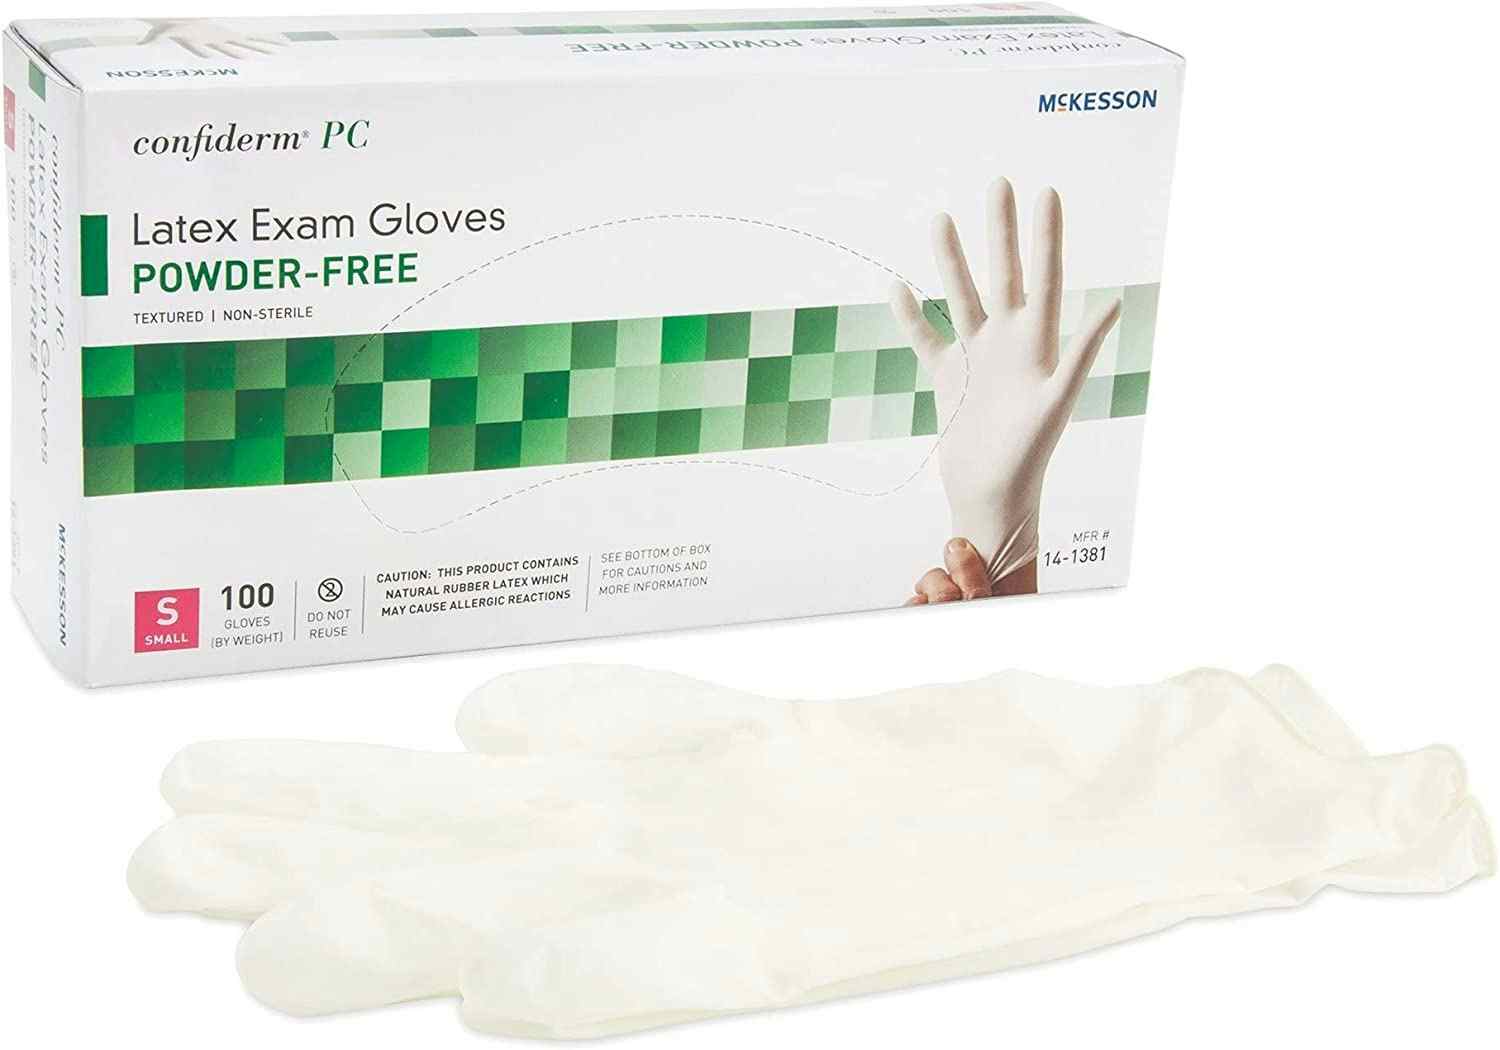 McKesson Confiderm PC Latex Exam Gloves, Powder-Free